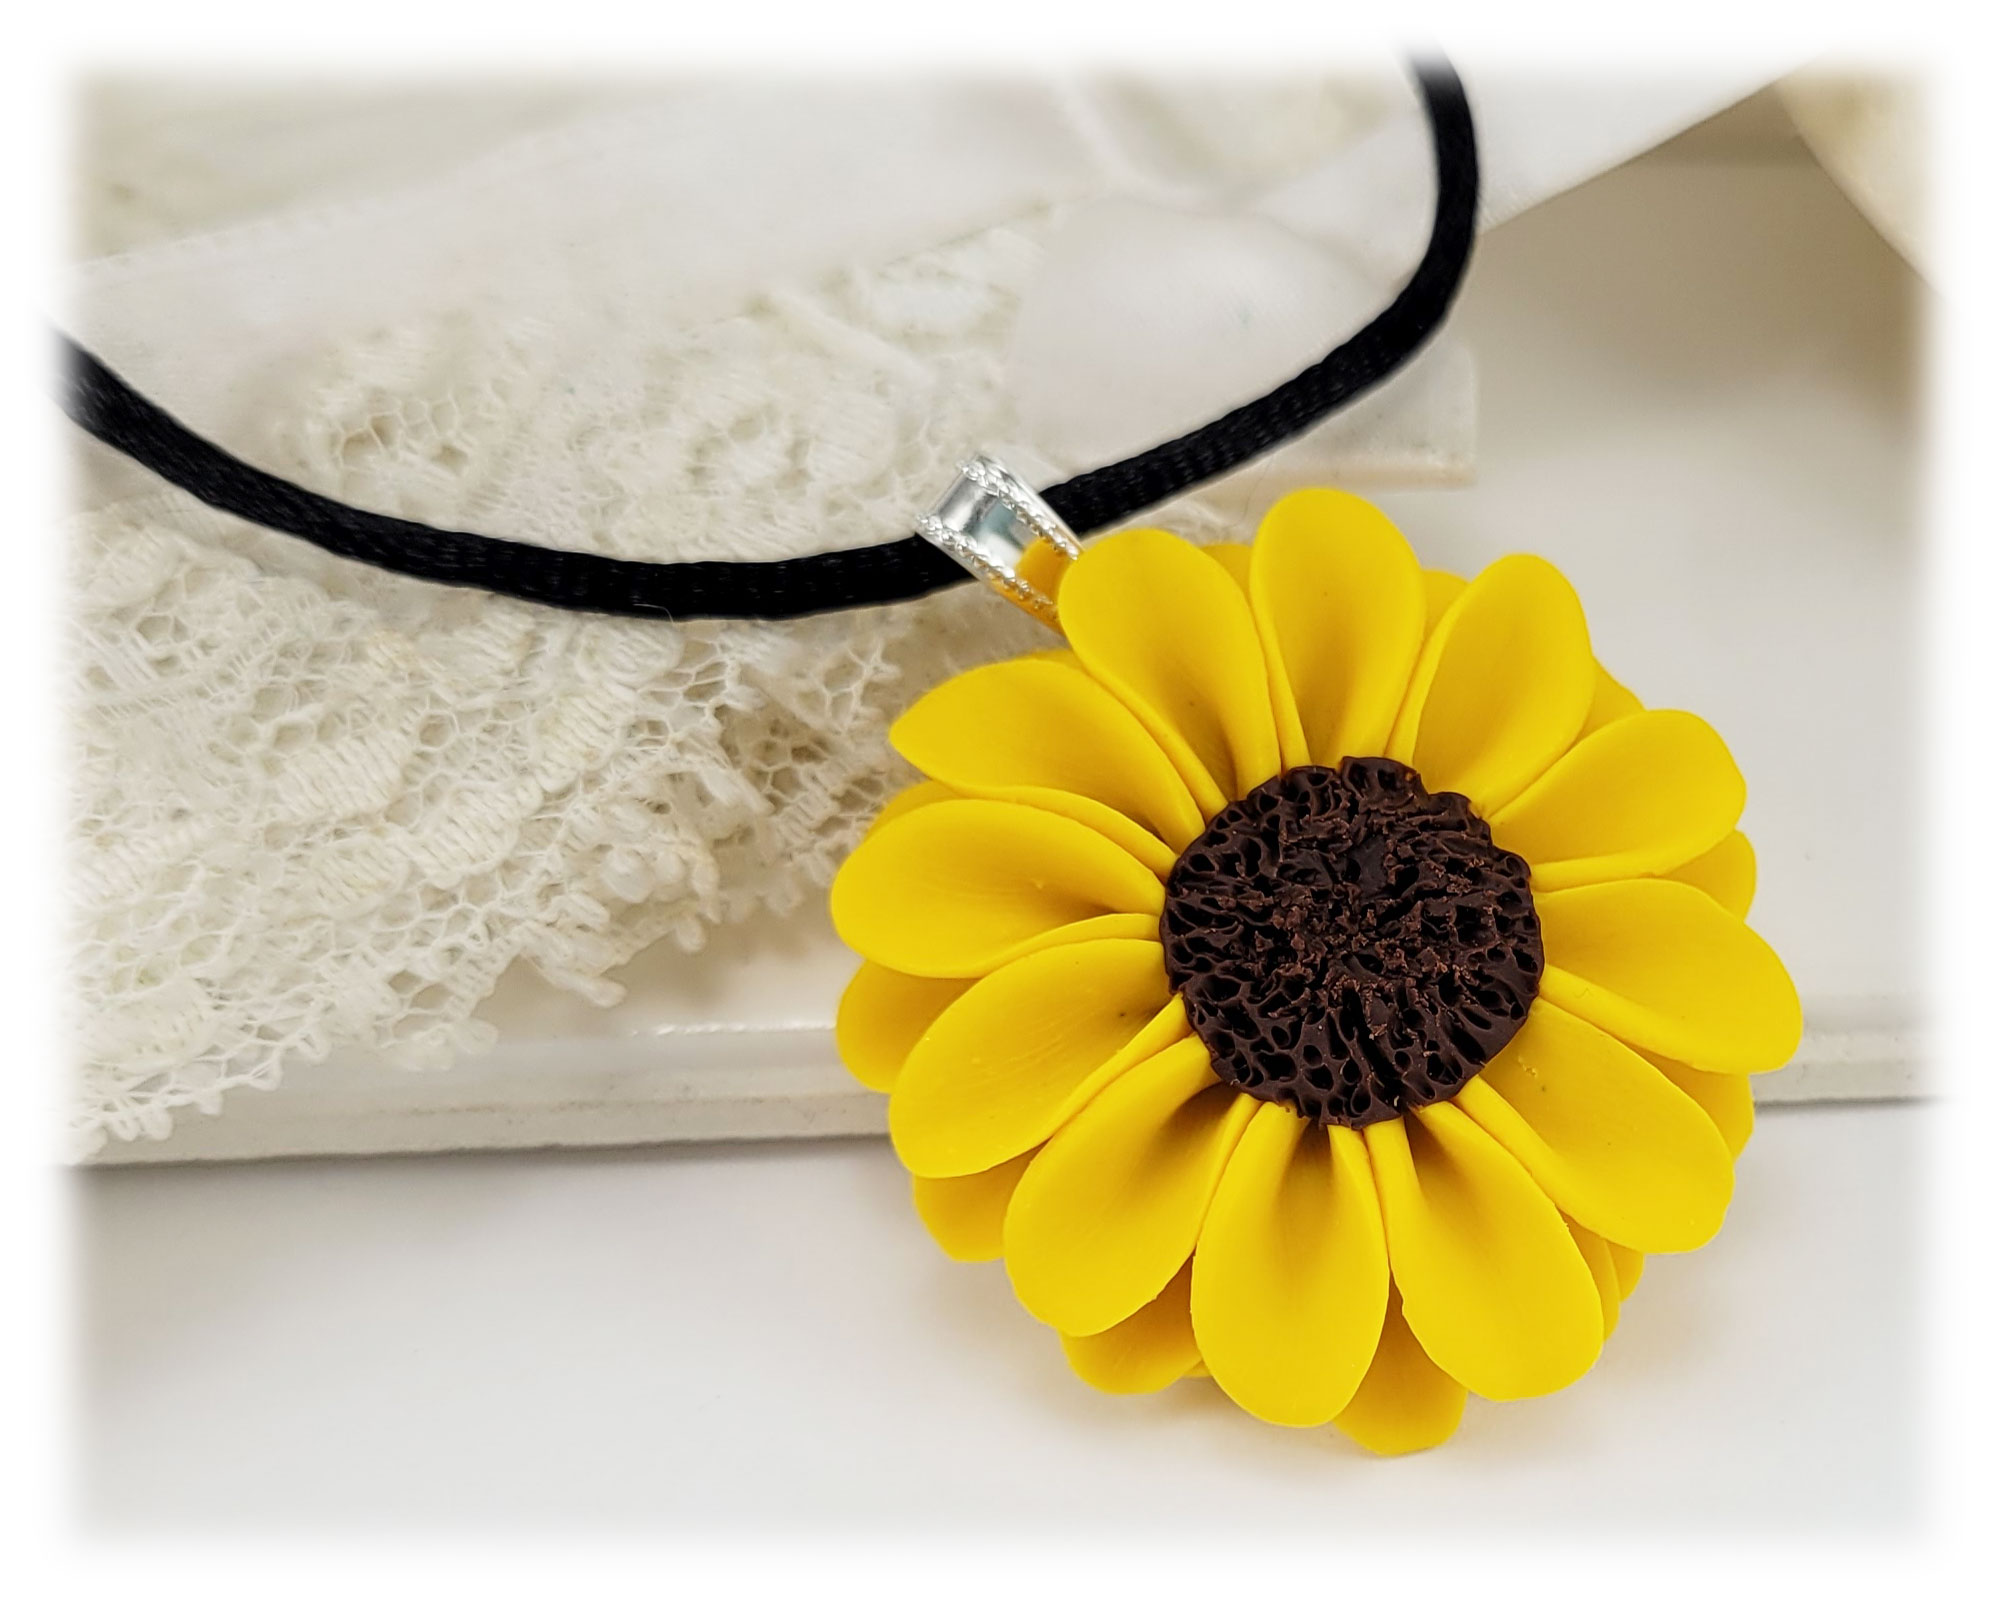 Black Sunflowers Flowers Floral Suede Lace Choker Necklace